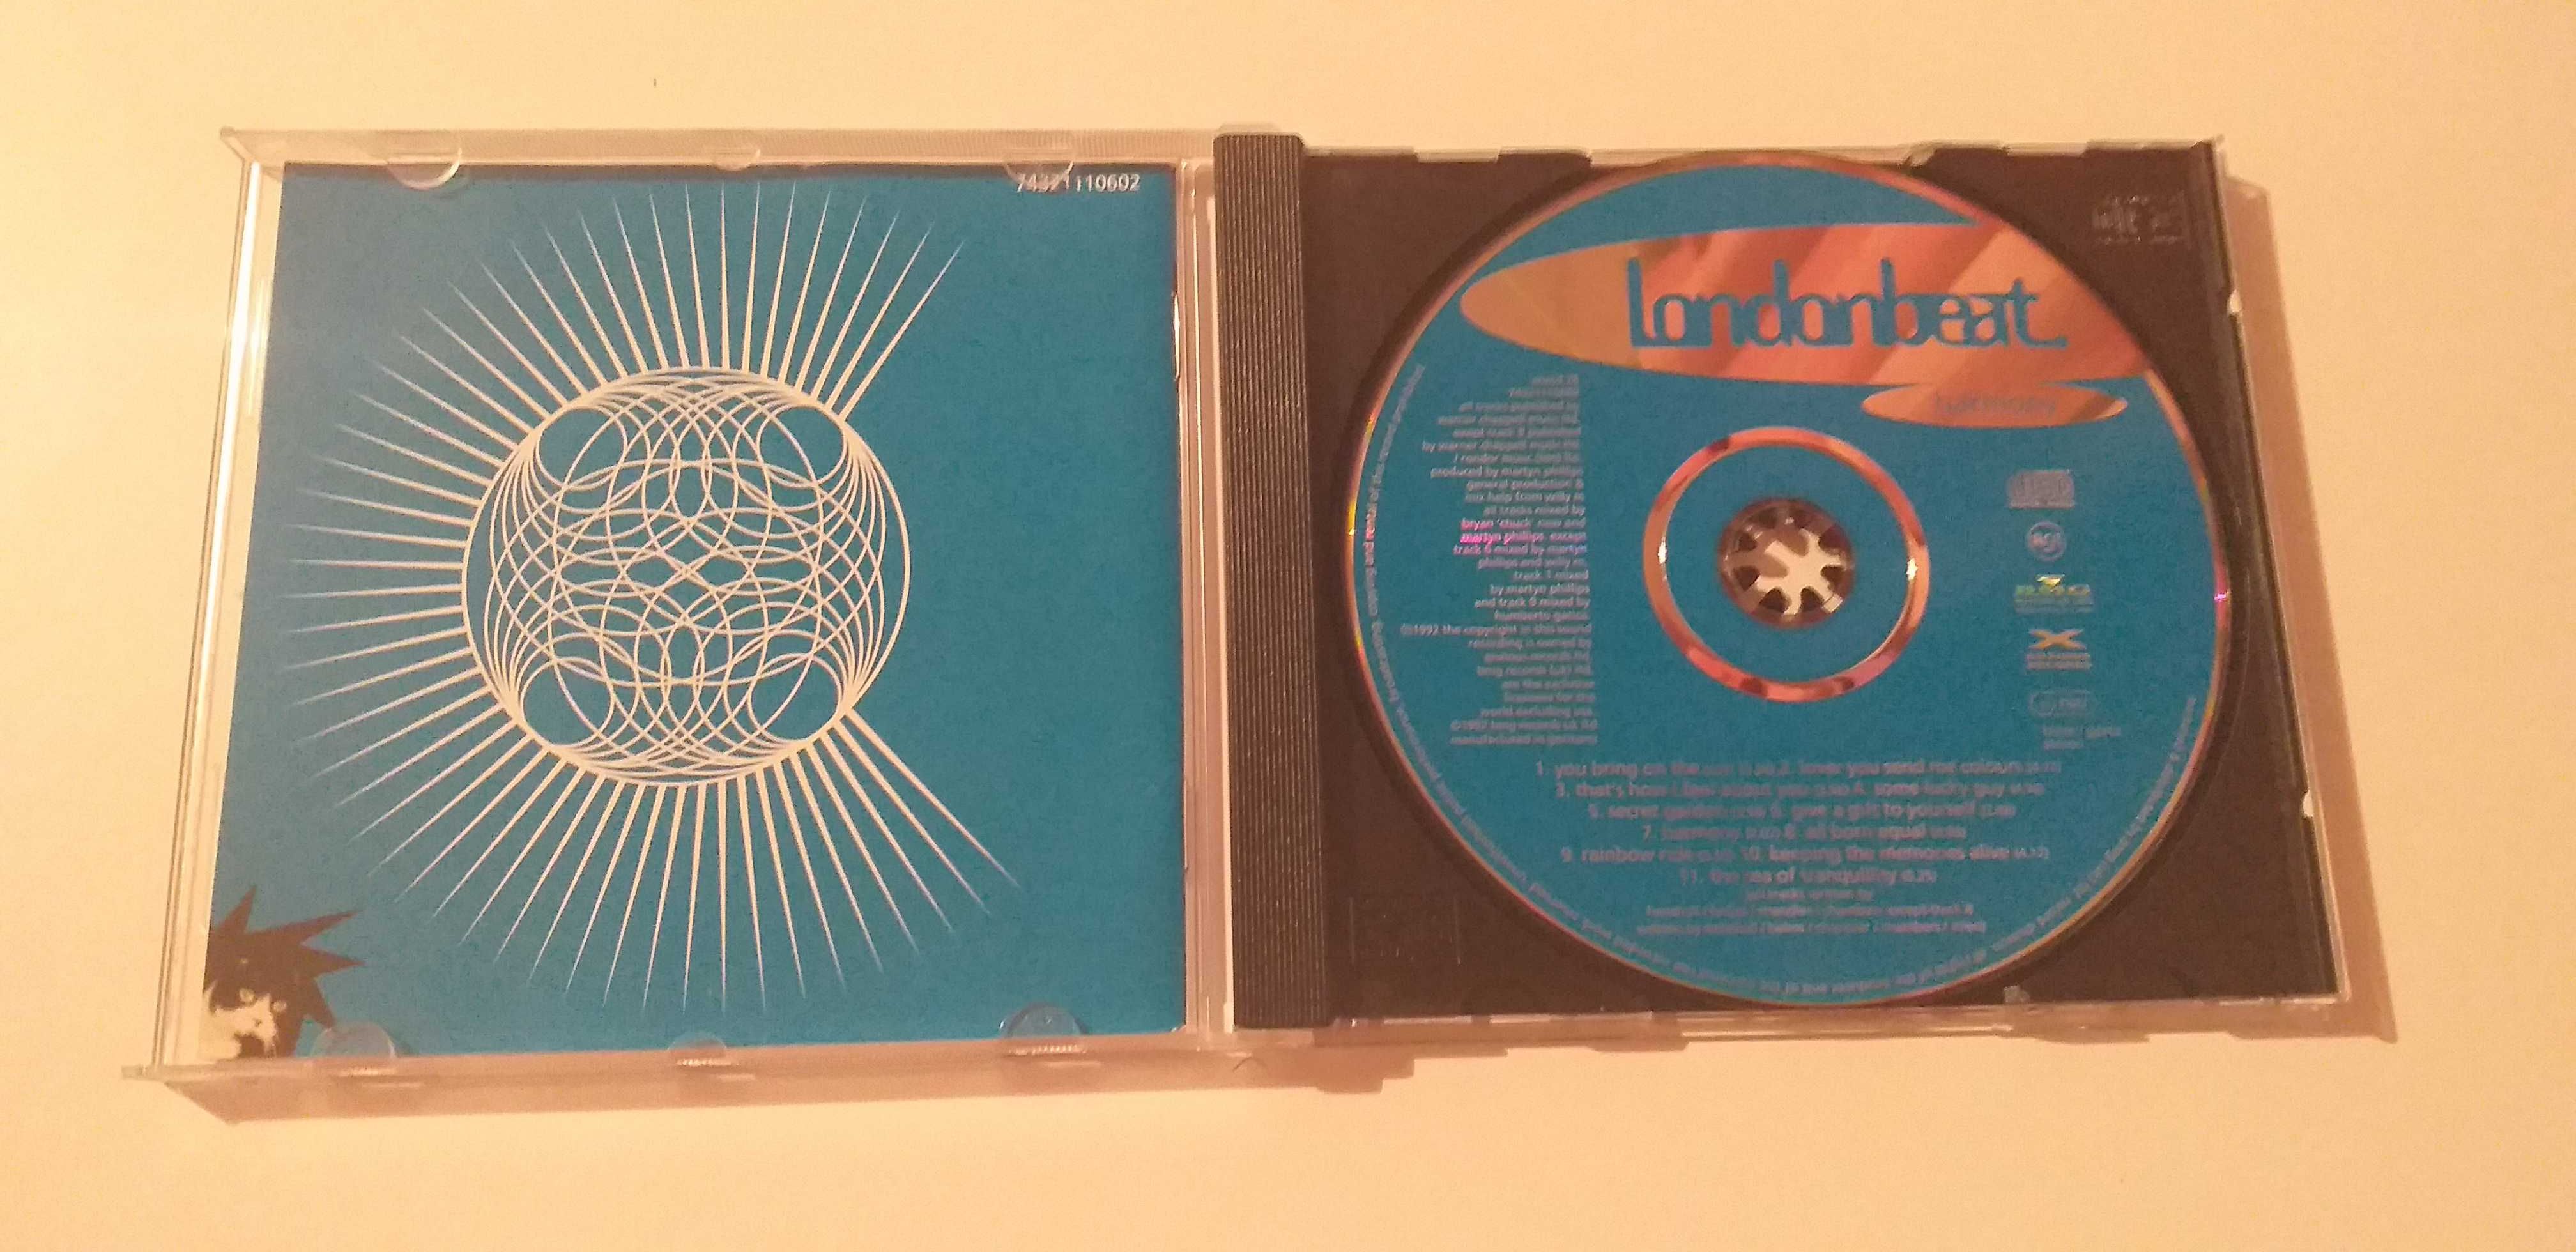 Londonbeat - " Harmony " - CD - portes incluidos